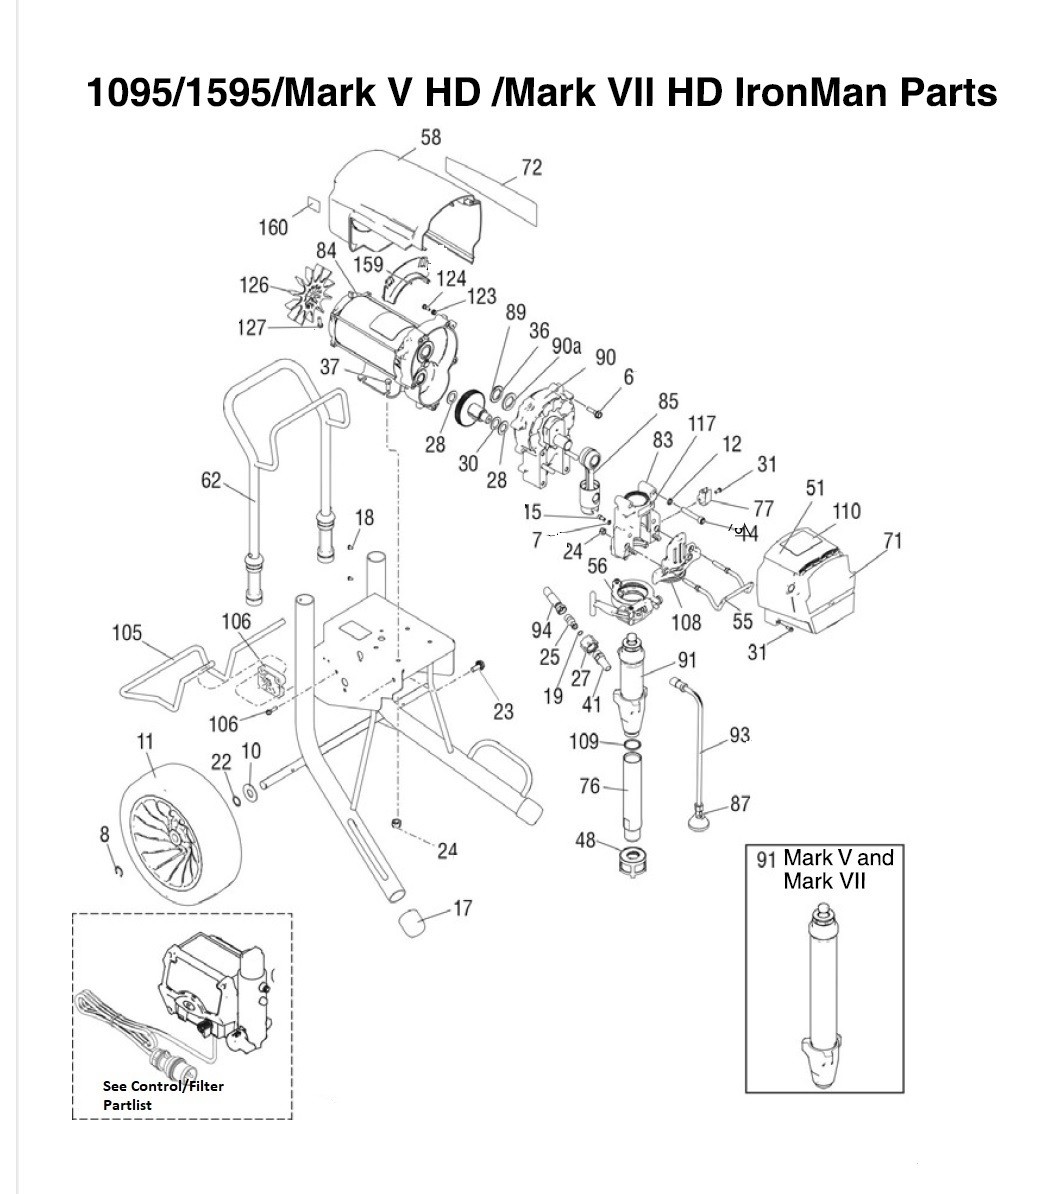 Graco Mark VII HD IronMan Sprayer Parts